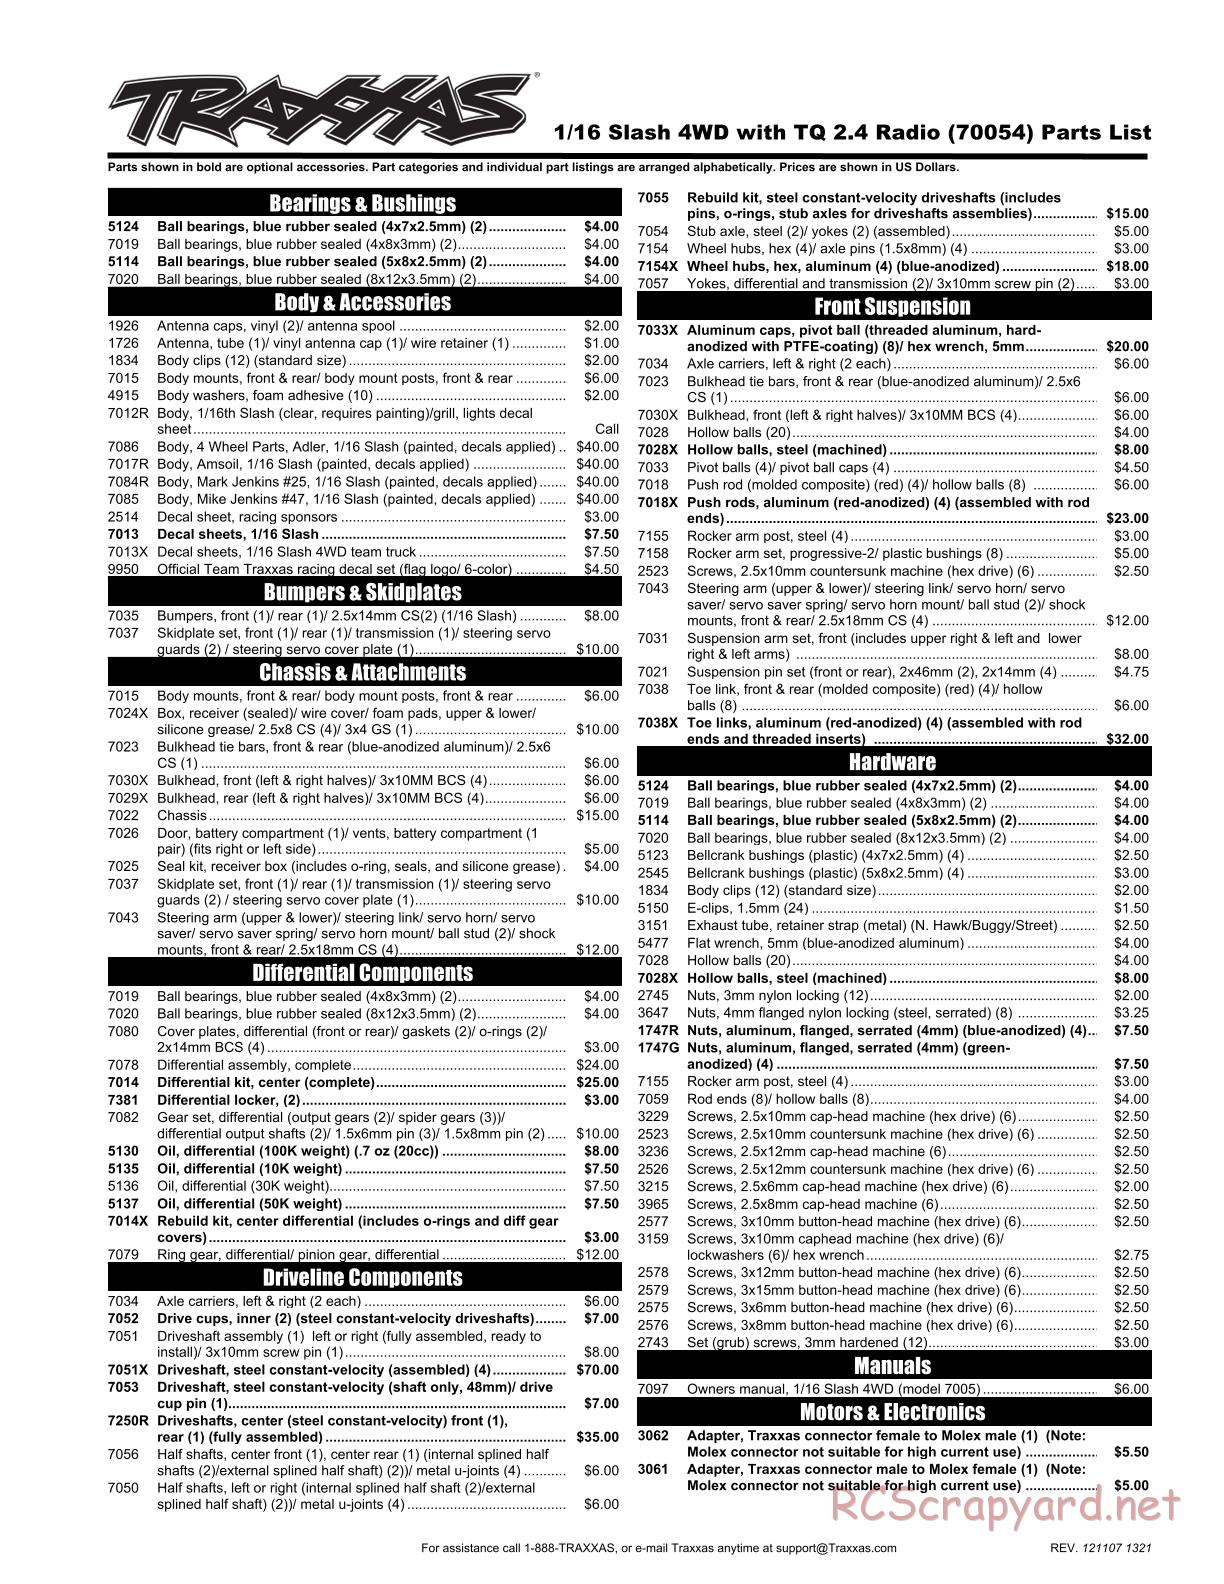 Traxxas - 1/16 Slash 4x4 Brushed (2013) - Parts List - Page 1